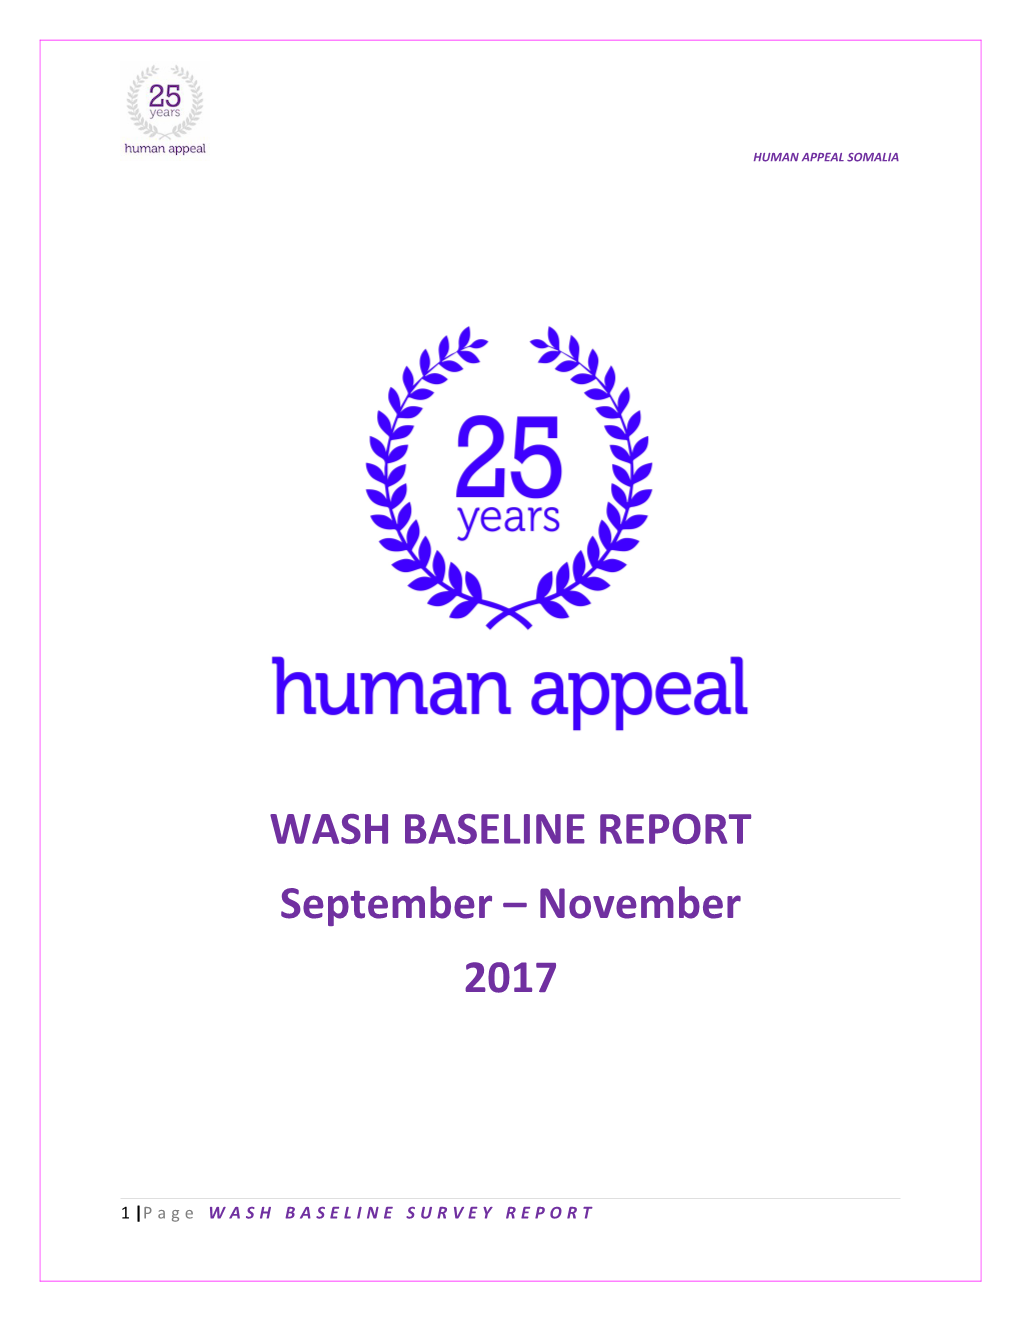 Wash Baseline Report